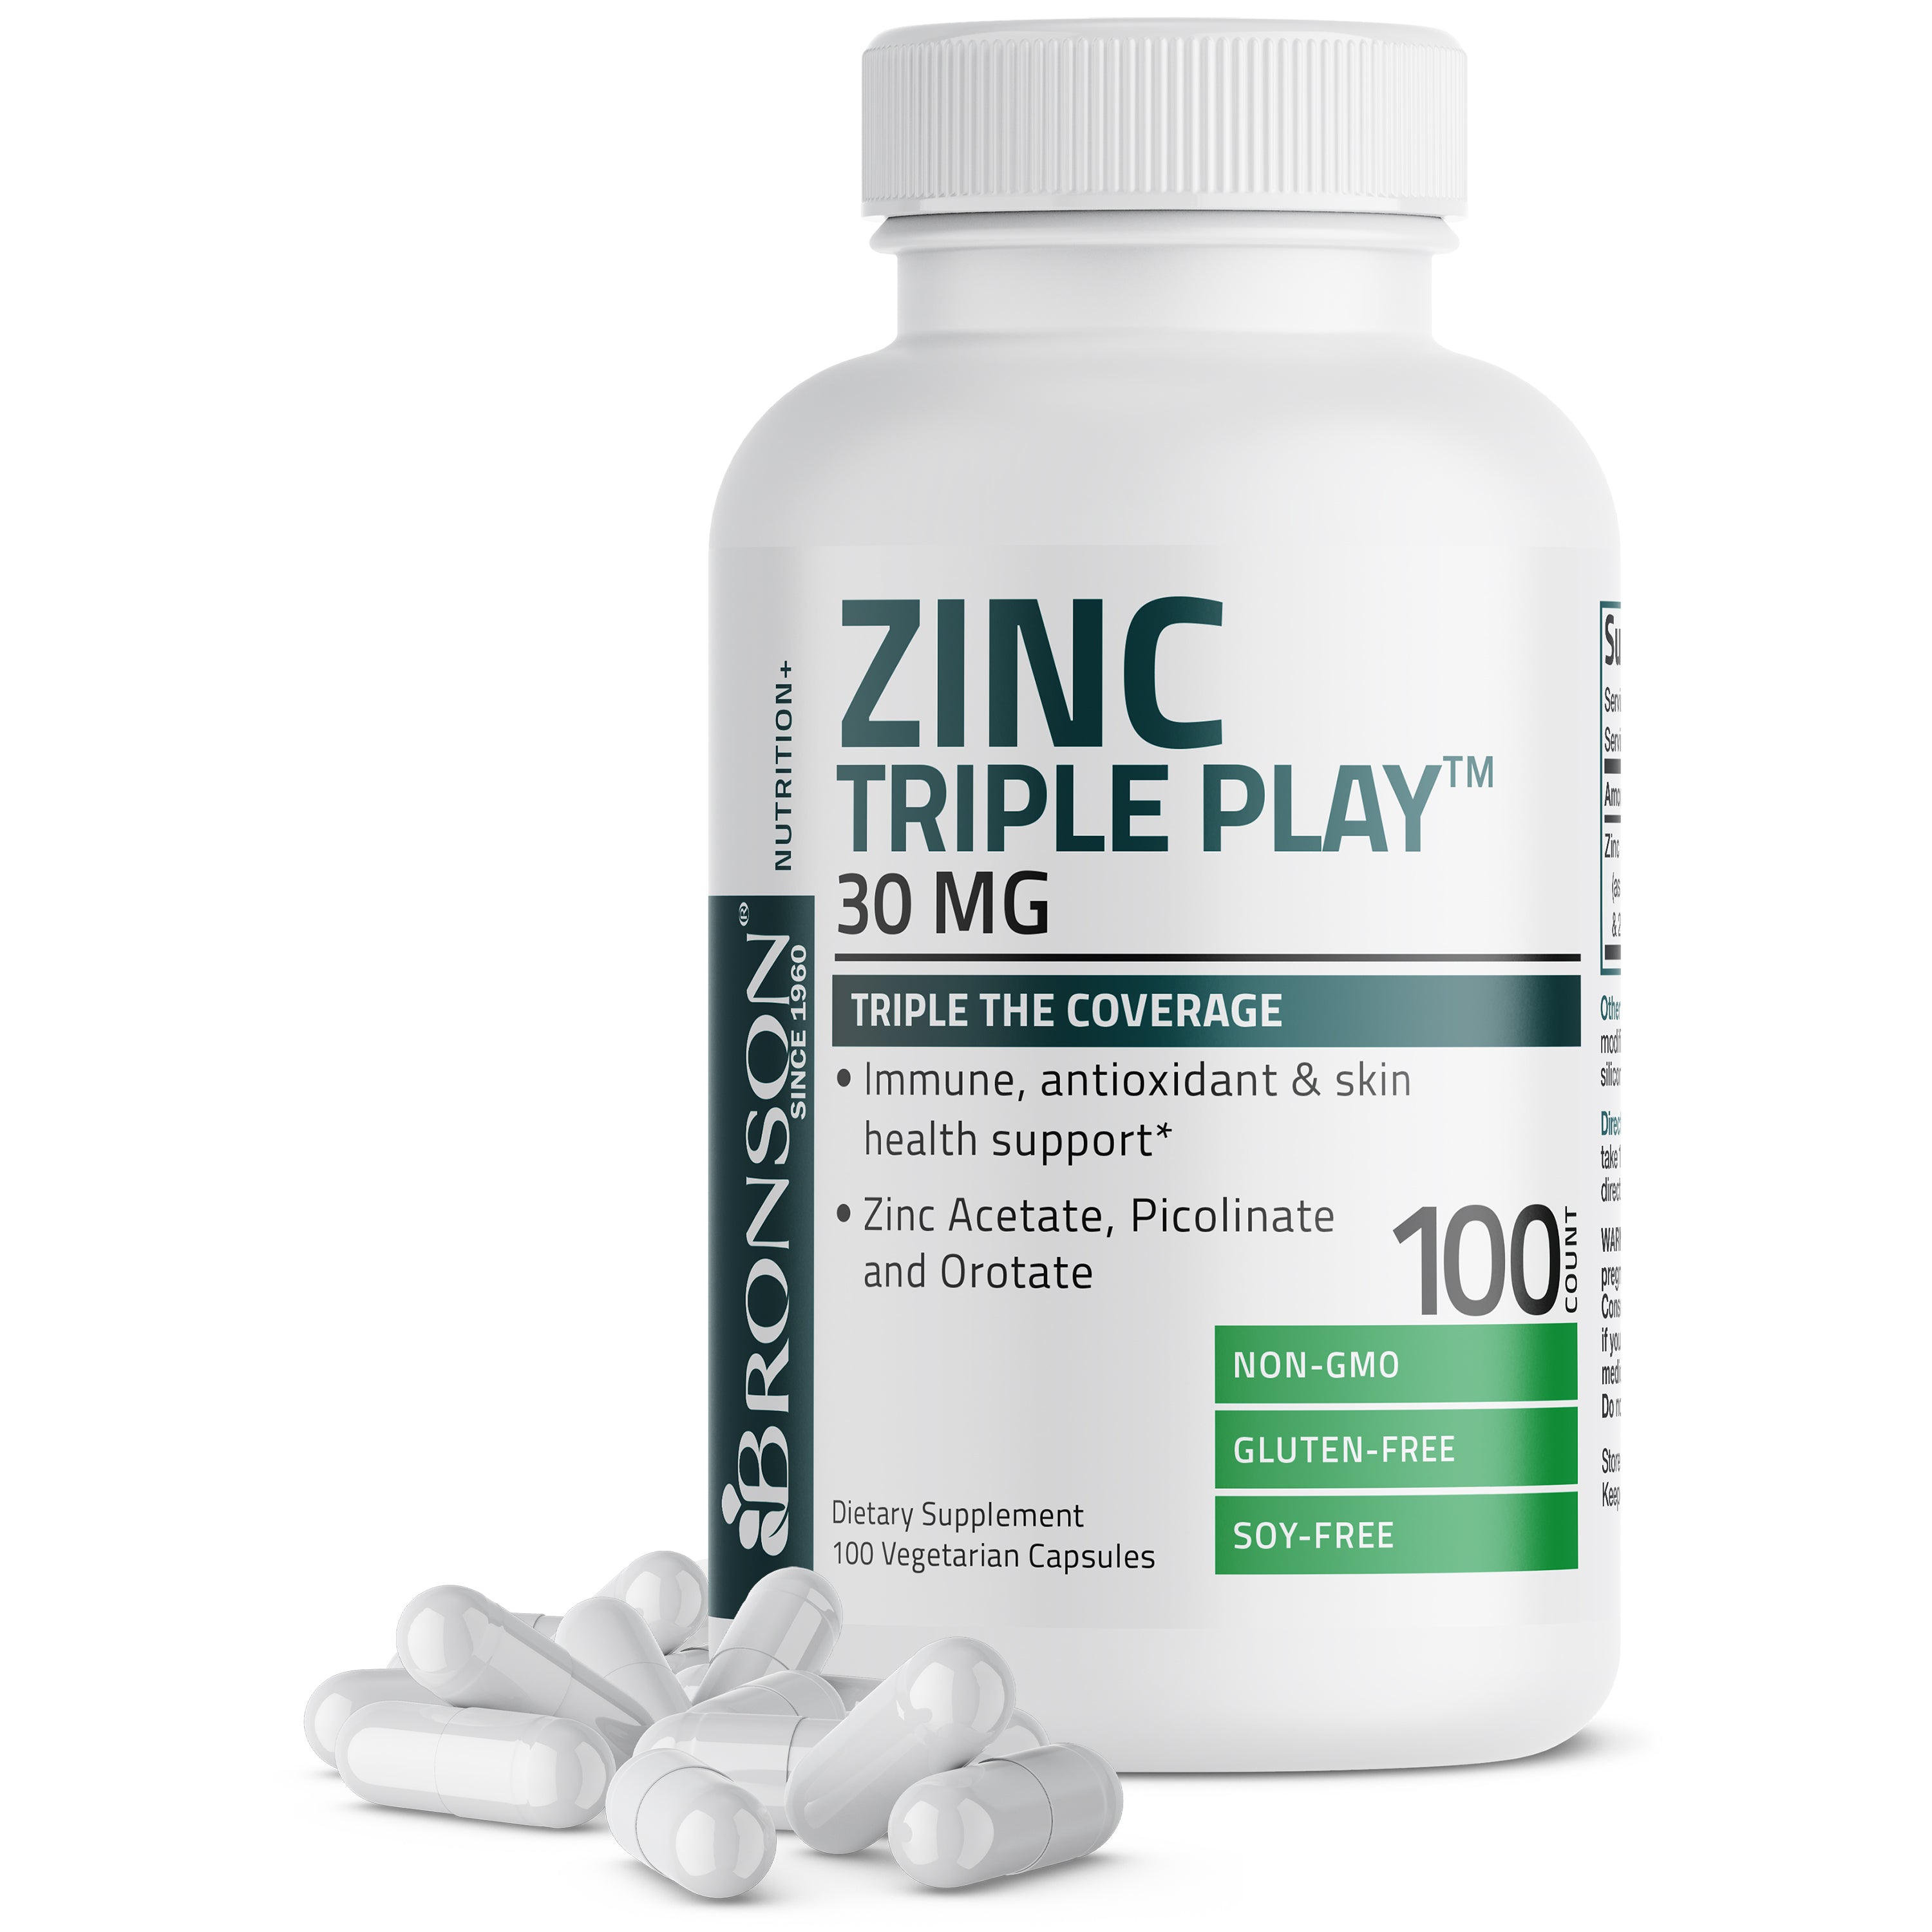 Zinc Triple Play - 30 mg view 10 of 7